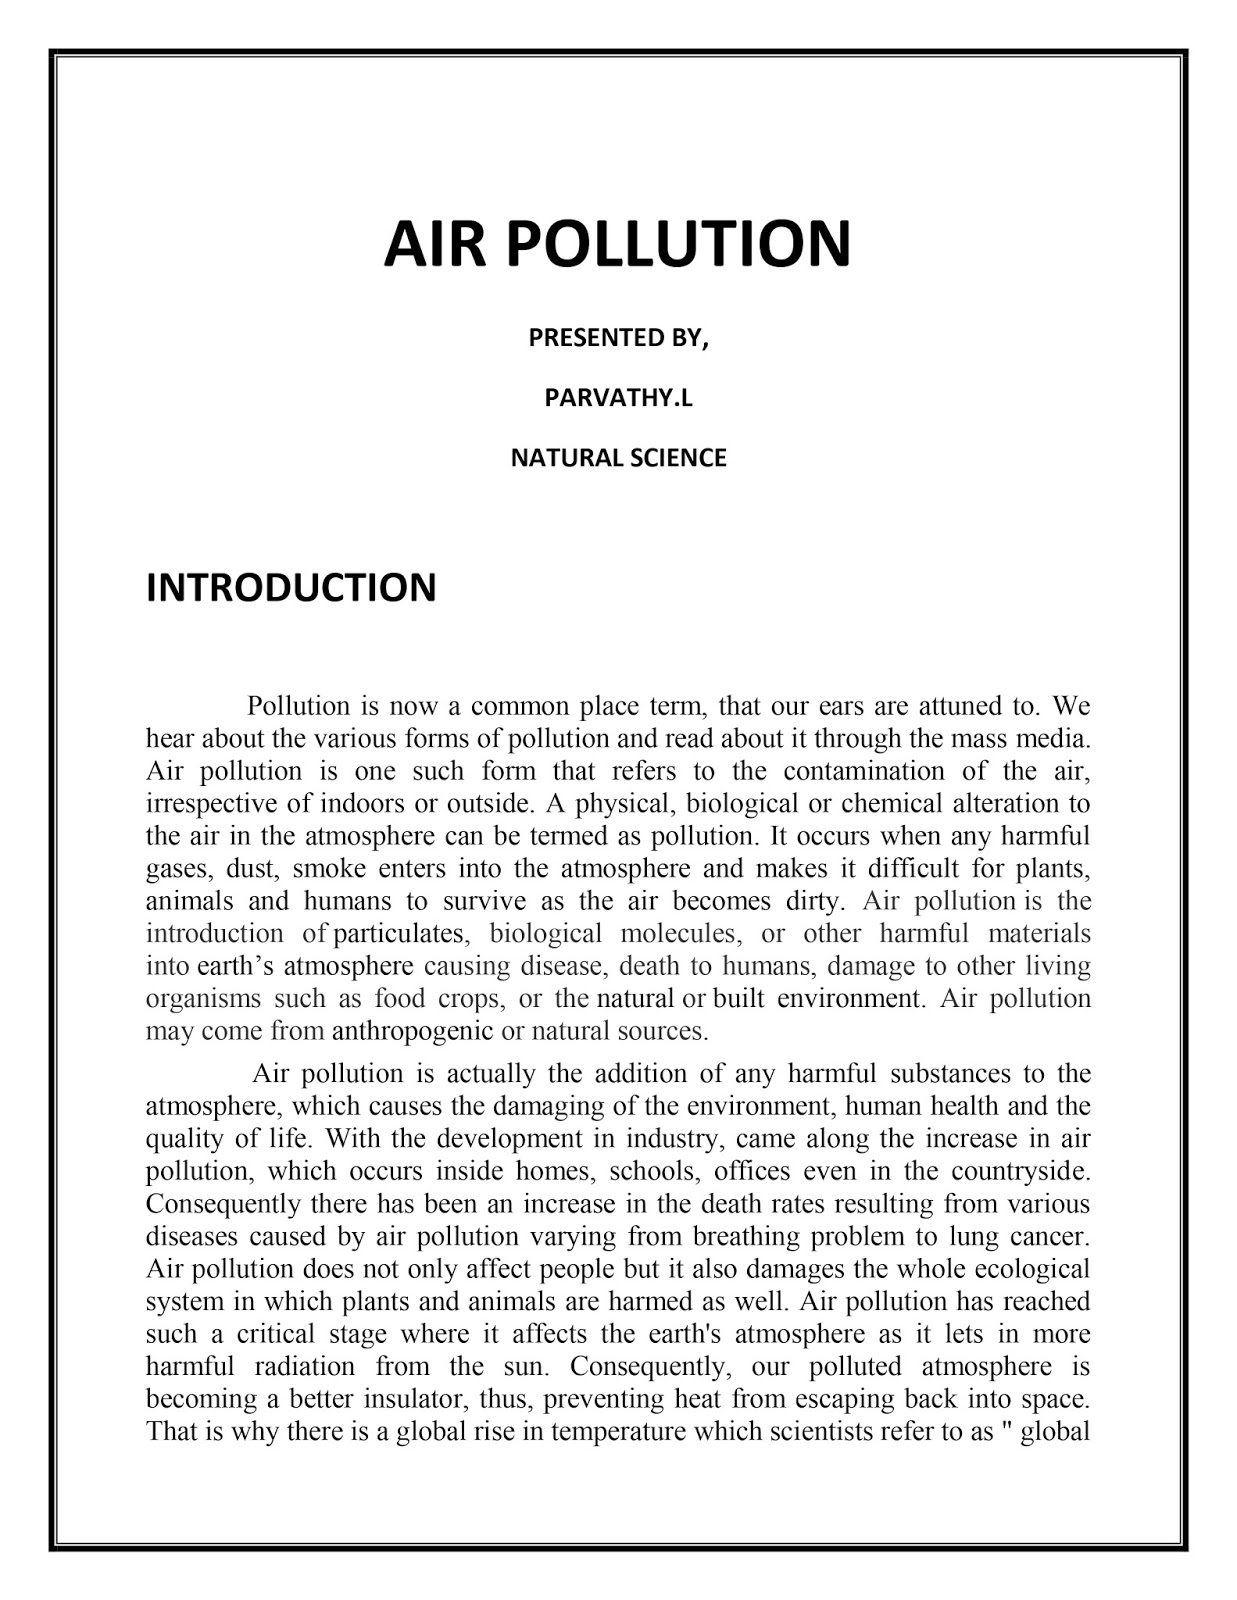 Air pollution conclusion essay